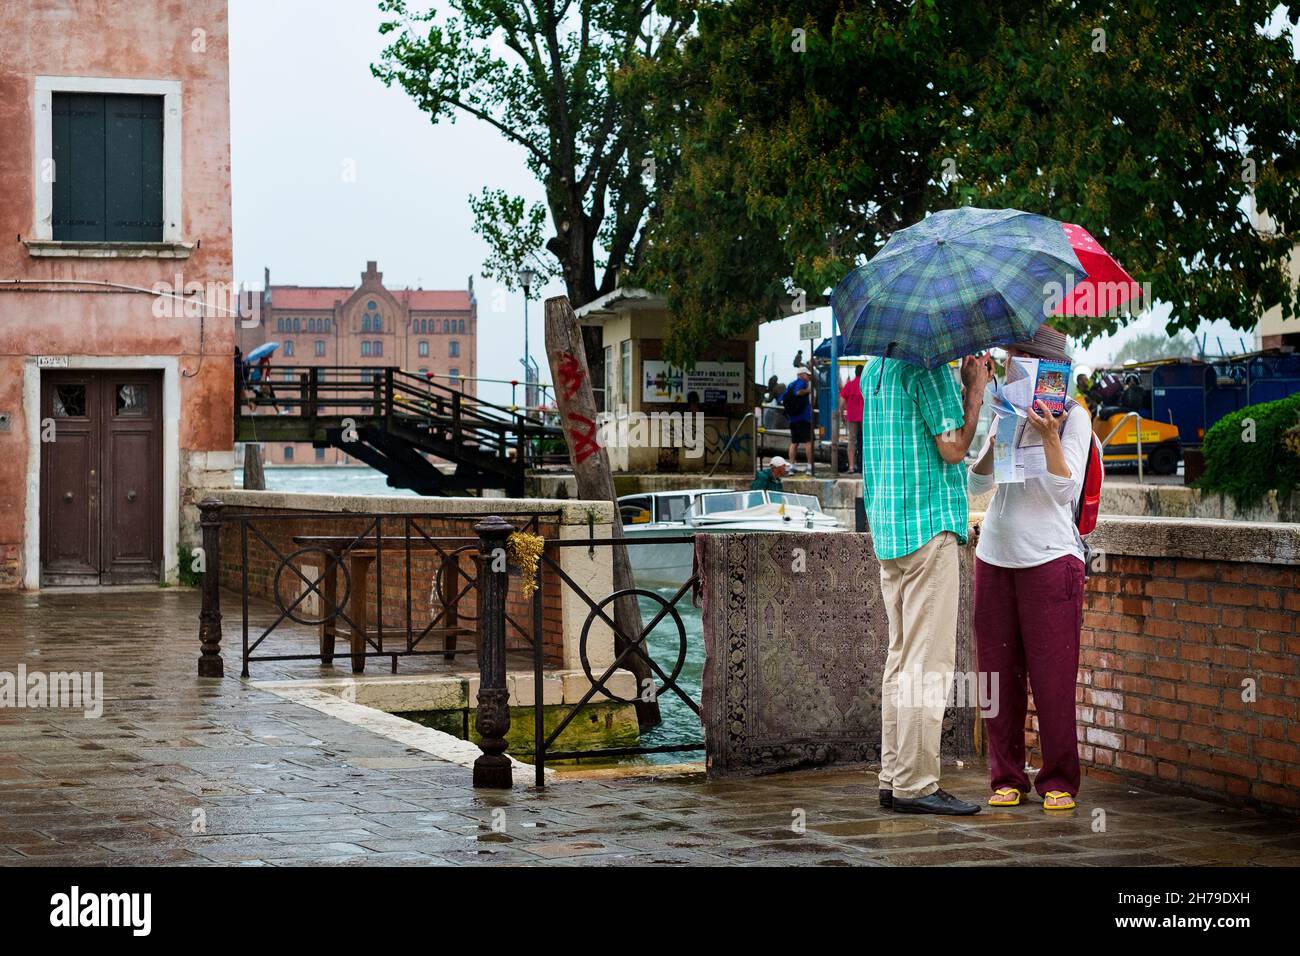 Touristen konsultieren ihre Karte im Regen, Dosoduro, Venedig, Italien. Stockfoto